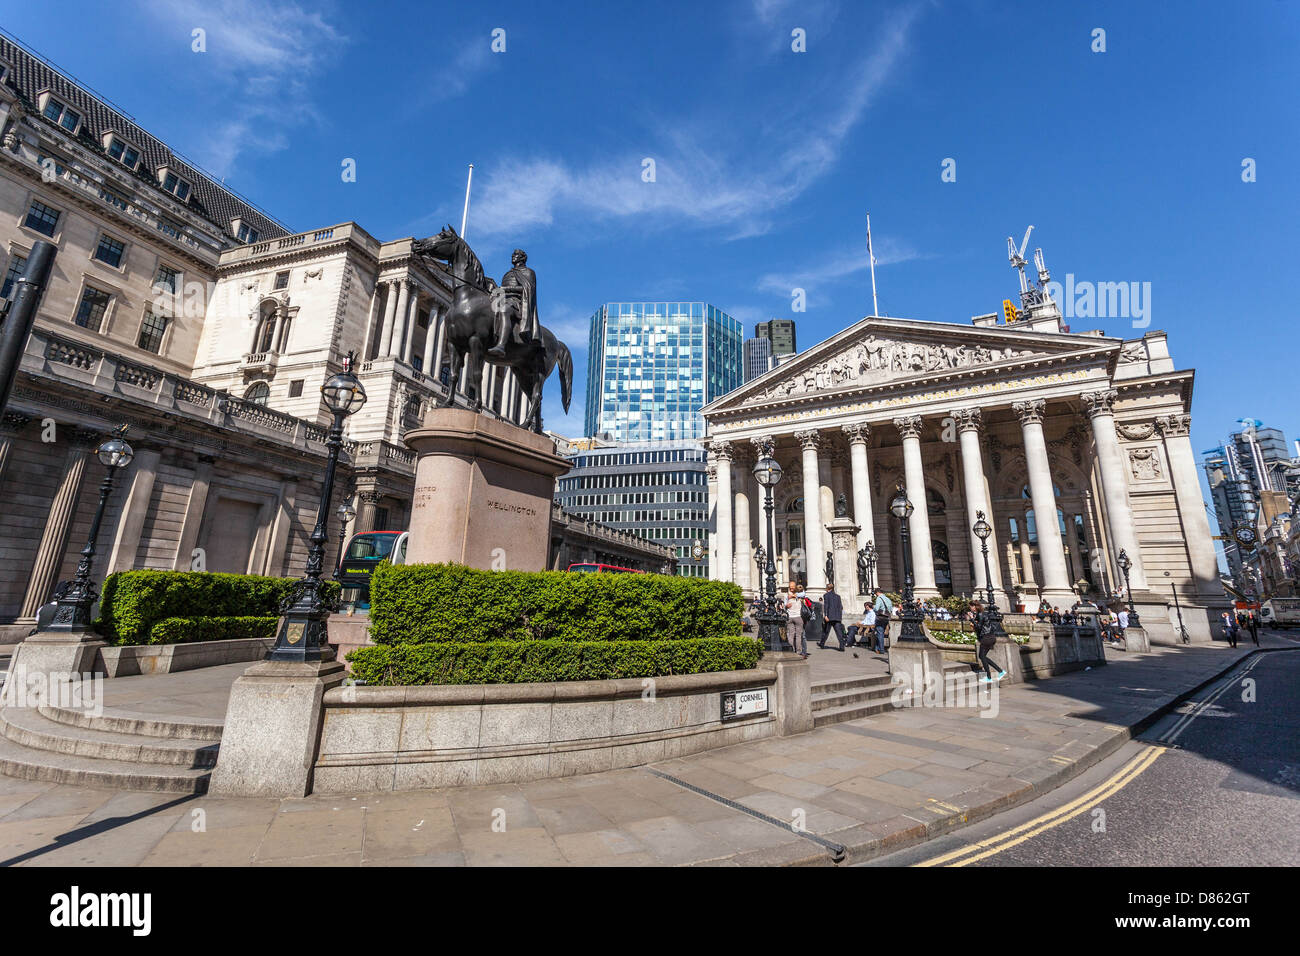 The Royal Exchange Building and Duke Wellington equestrian statue, London, England, UK. Stock Photo